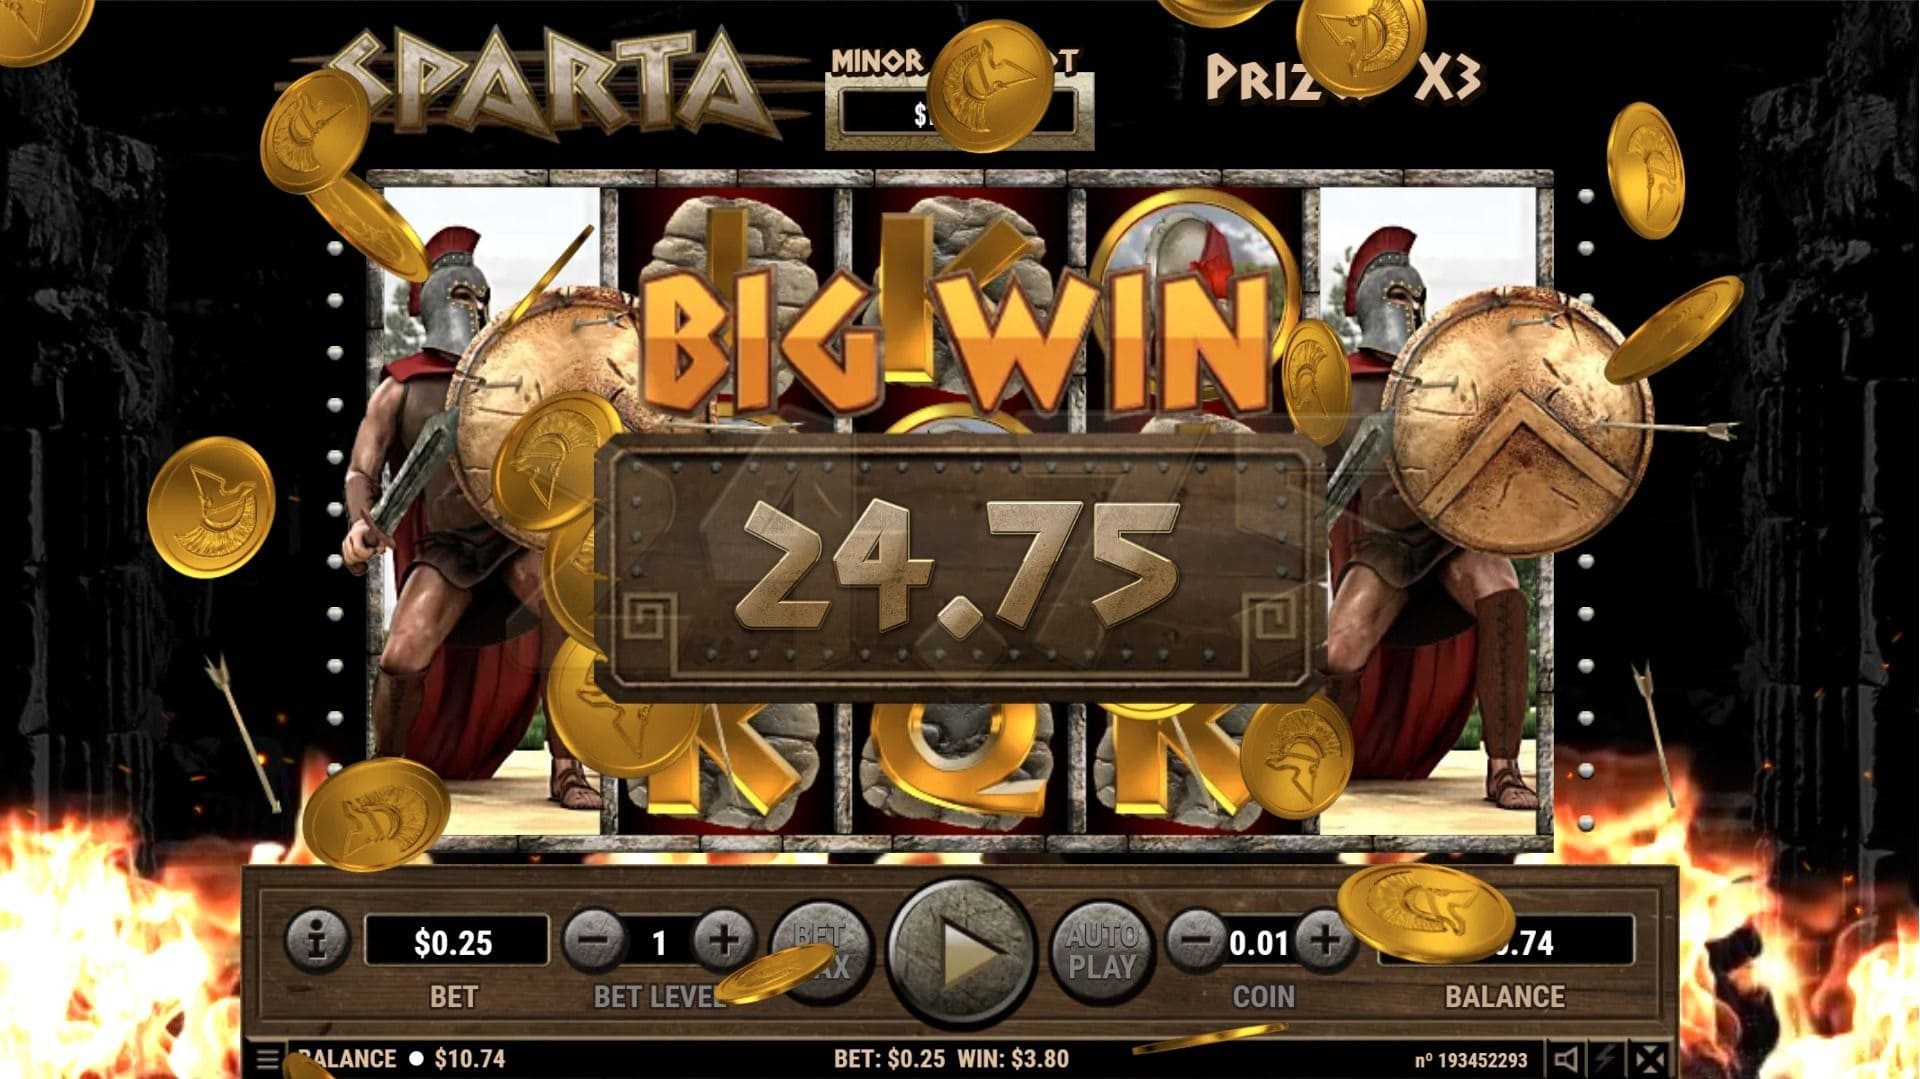 Sparta Slot game